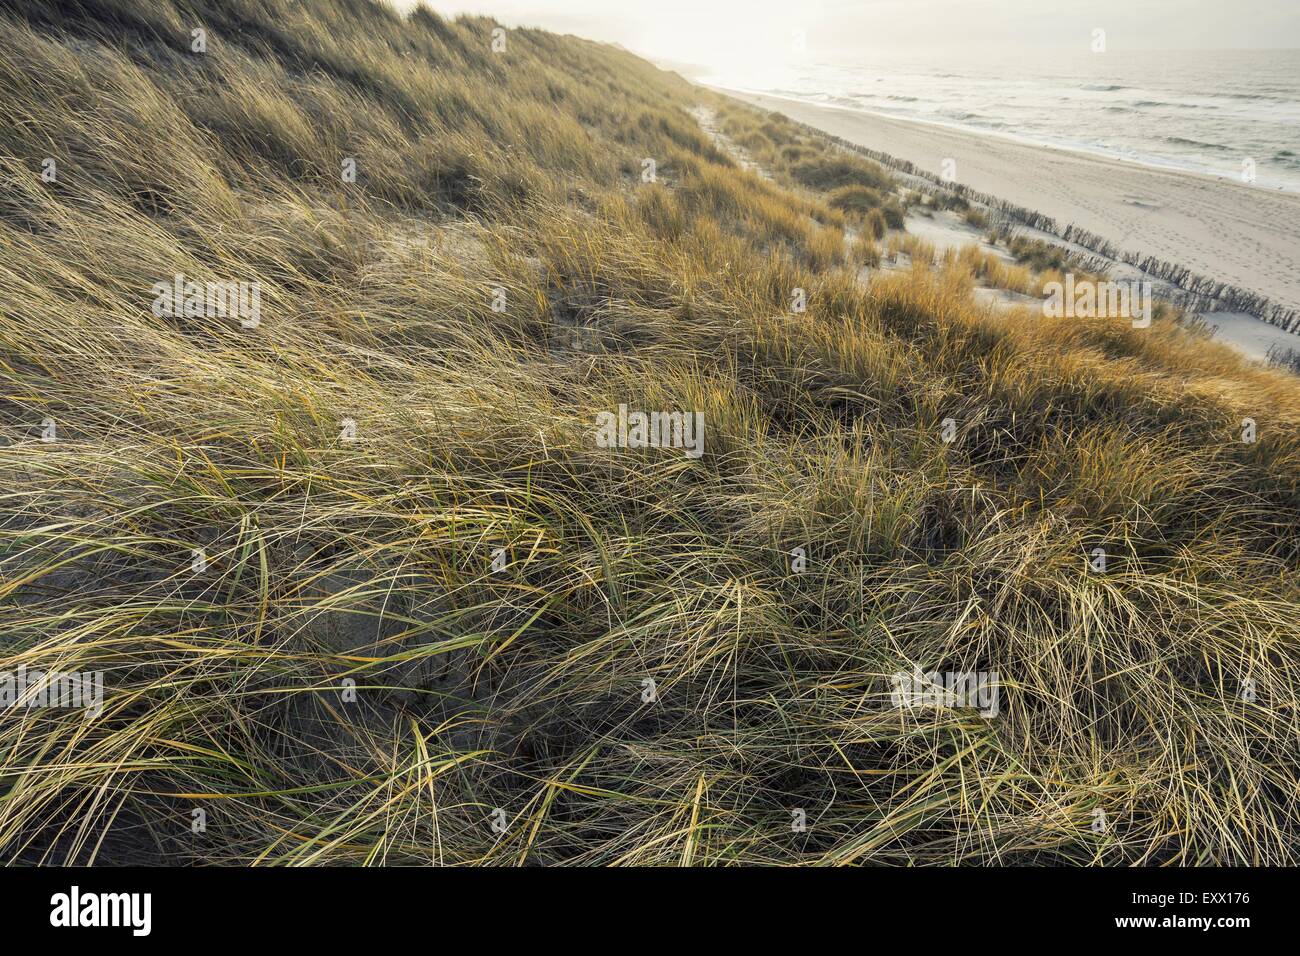 Boardwalk in dunes, Rantum, Sylt, Schleswig-Holstein, Germany, Europe Stock Photo